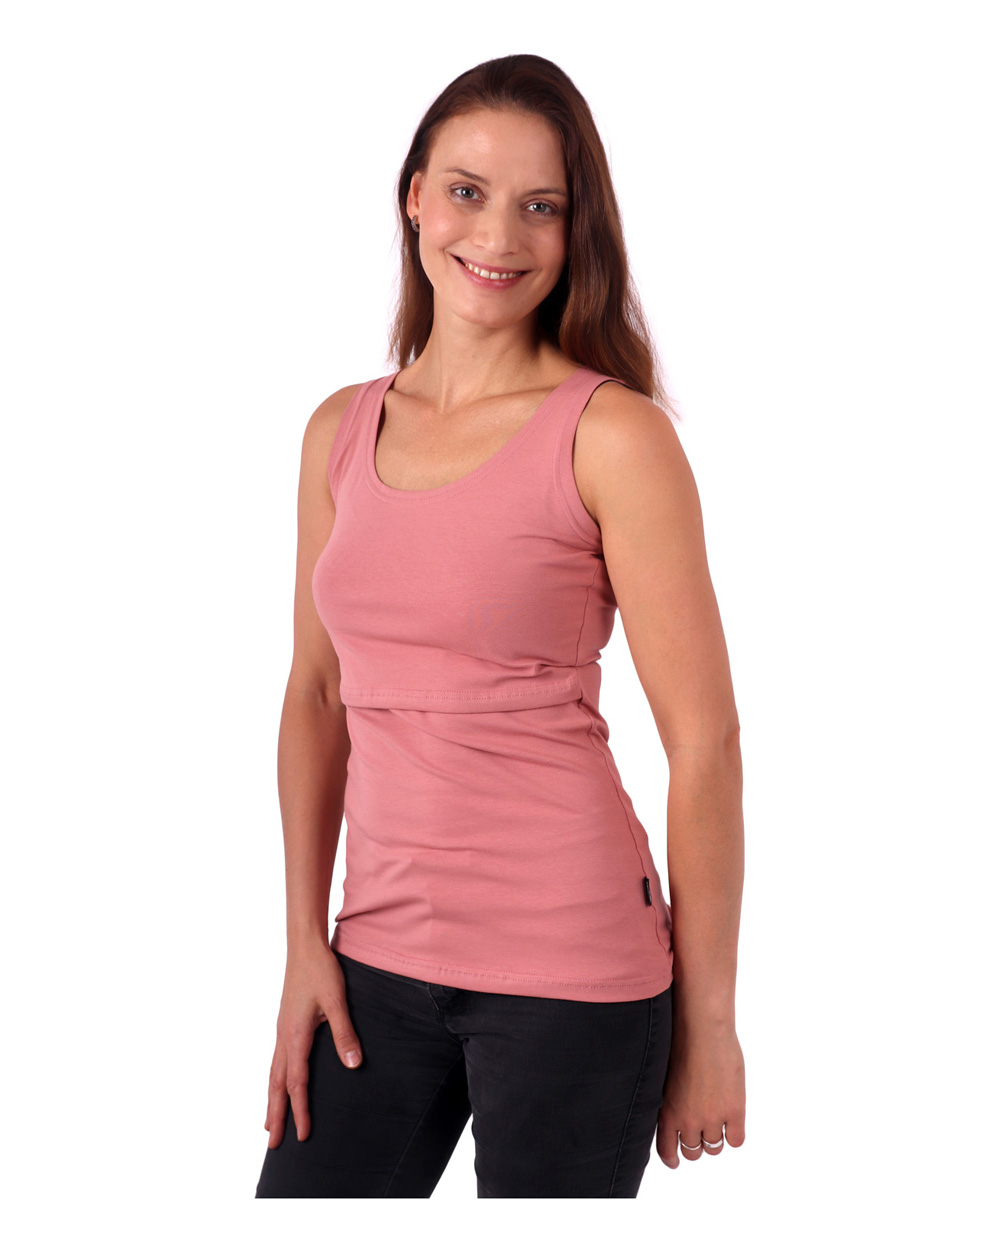 Breast-feeding T-shirt Katerina, no sleeves, old pink XS/S